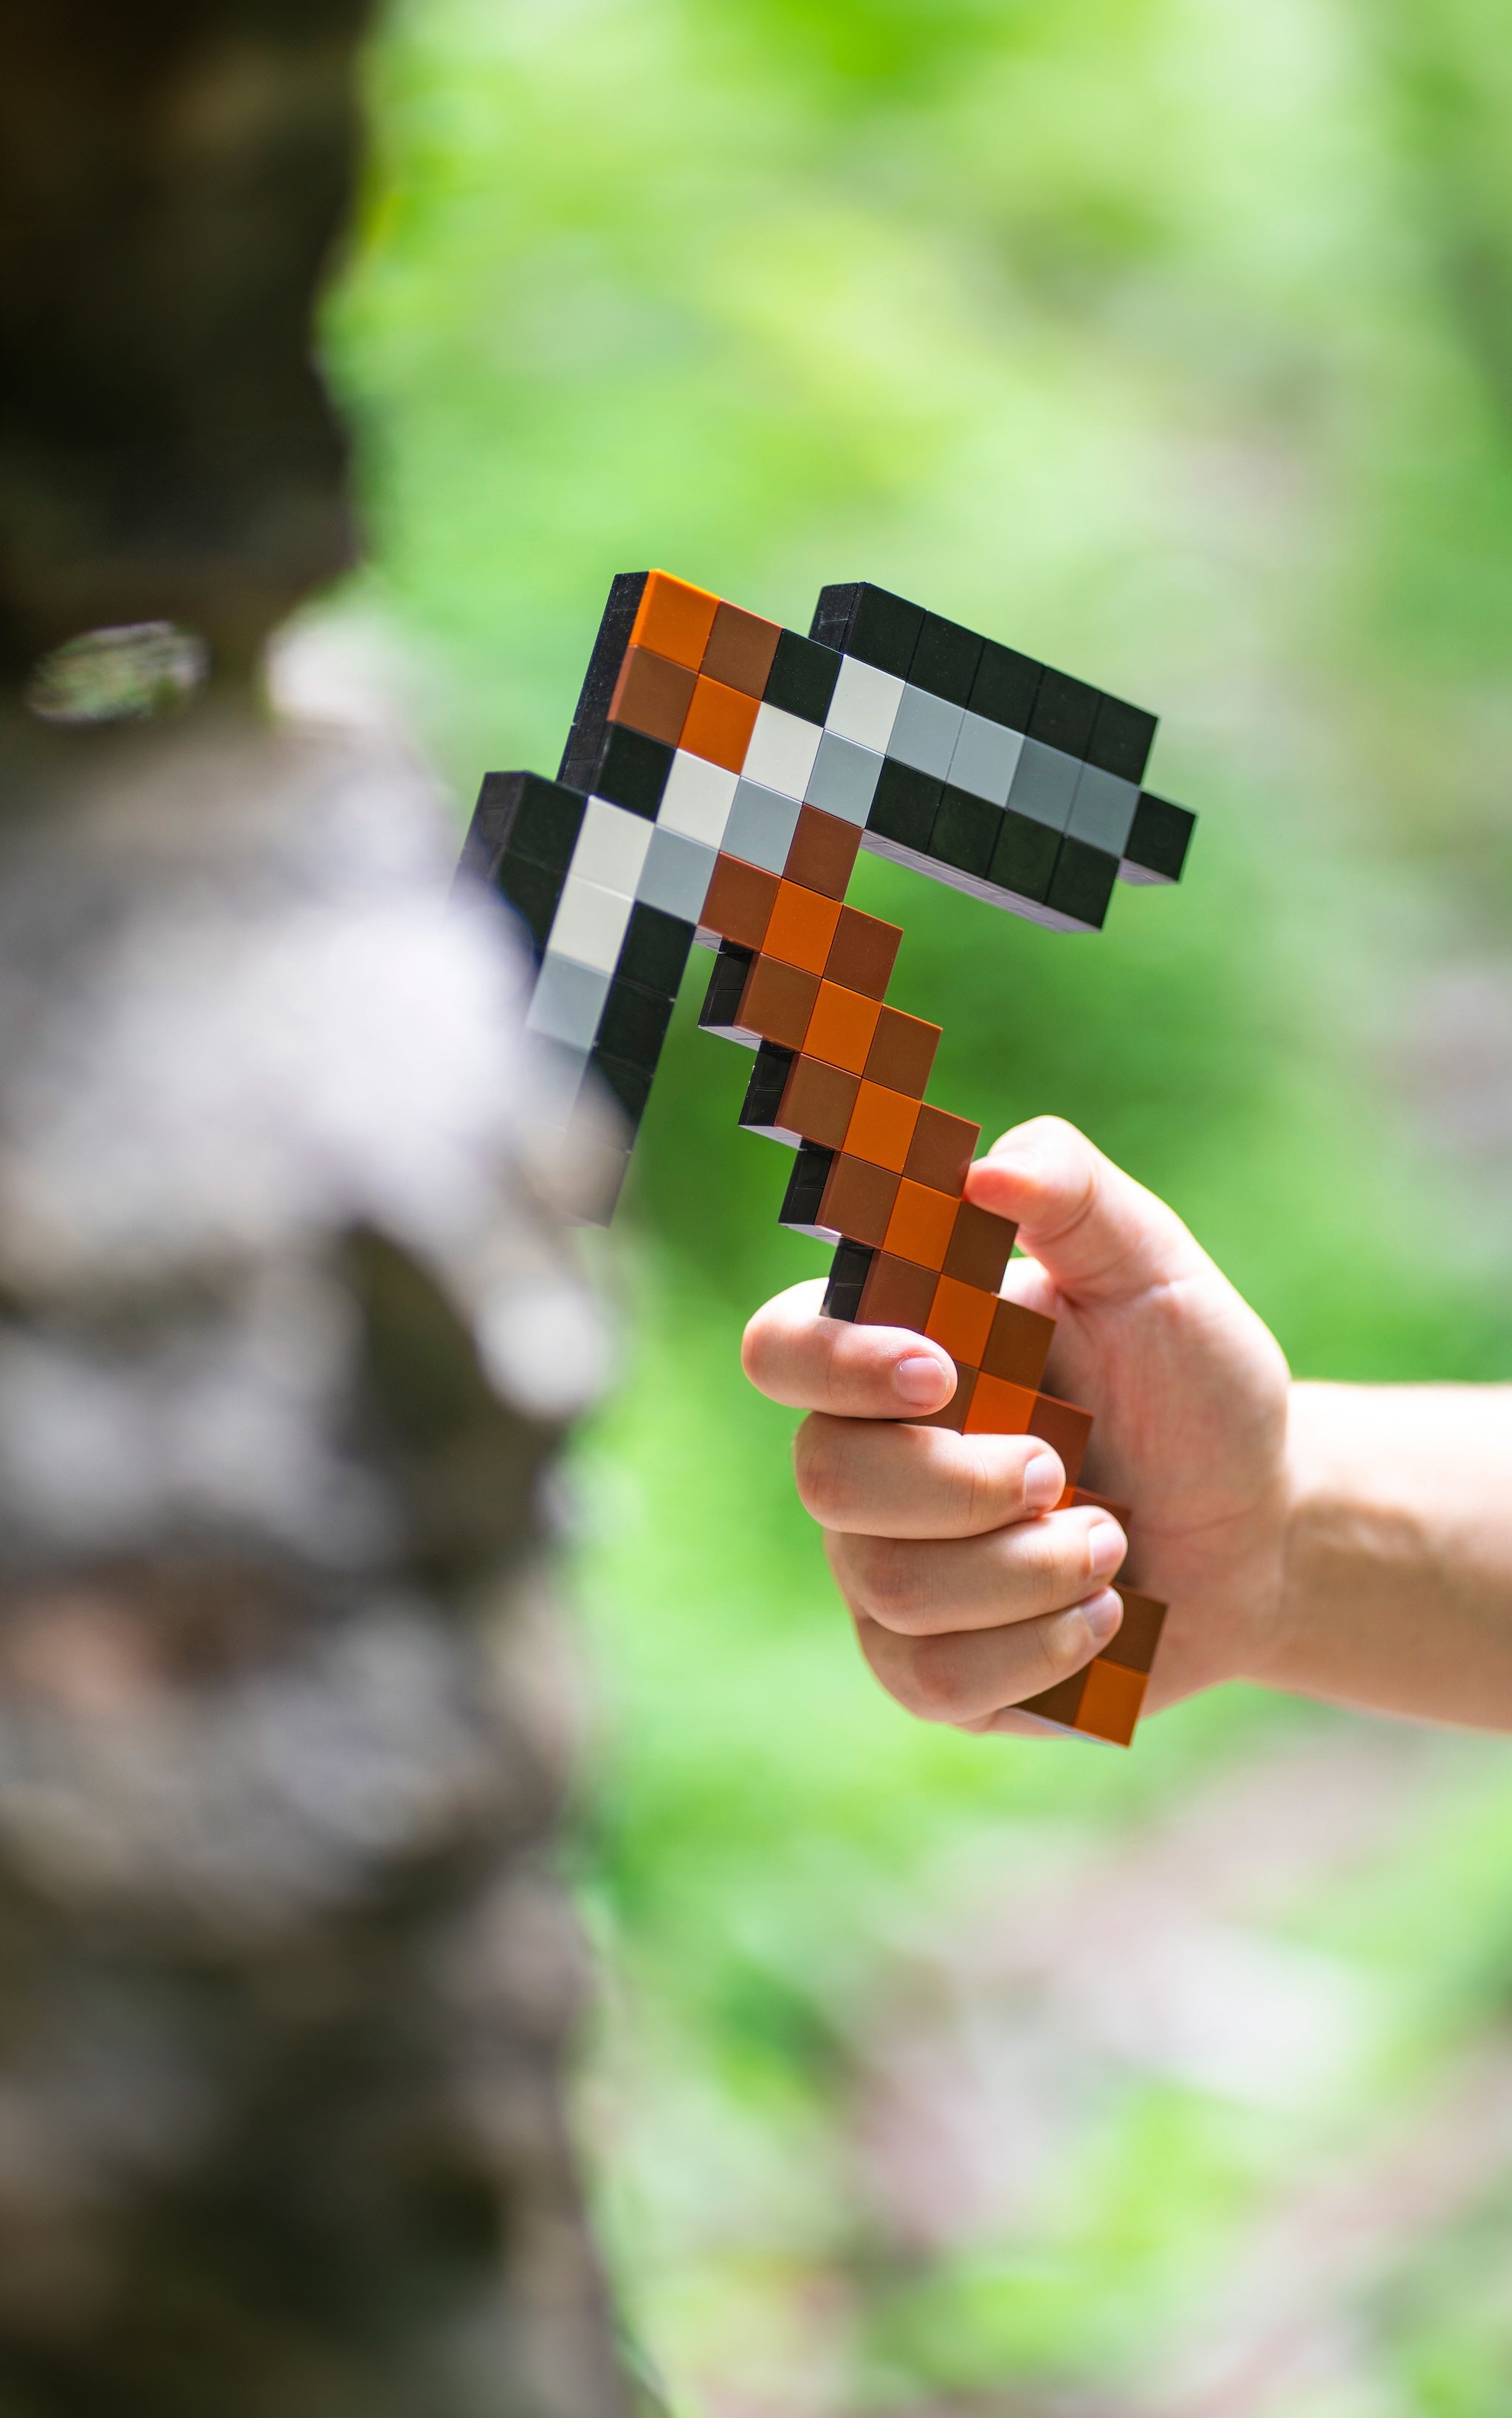 Mining Pickaxe Tool in LEGO Bricks by Bricker Builds Stone Taller web